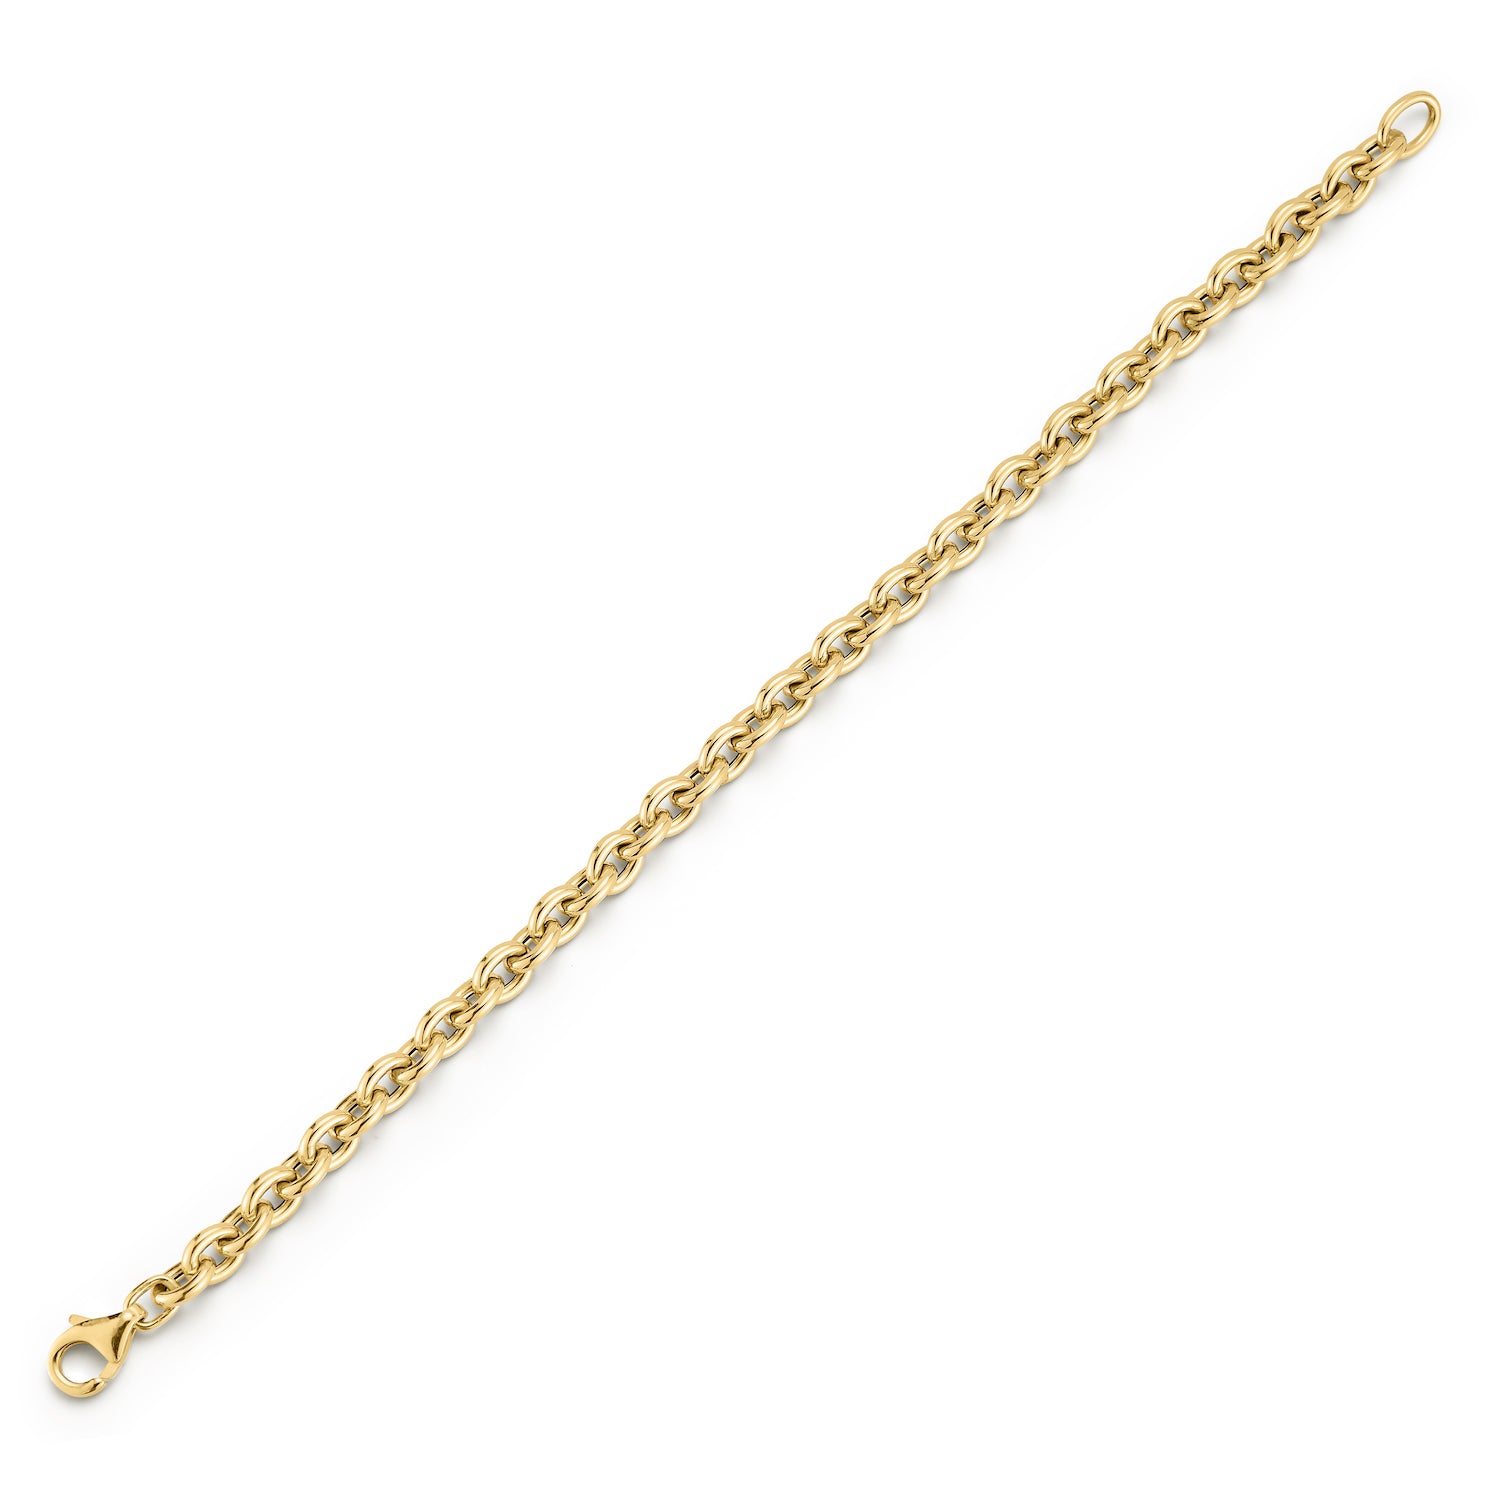 Sienna Chain Bracelet in 14k yellow gold